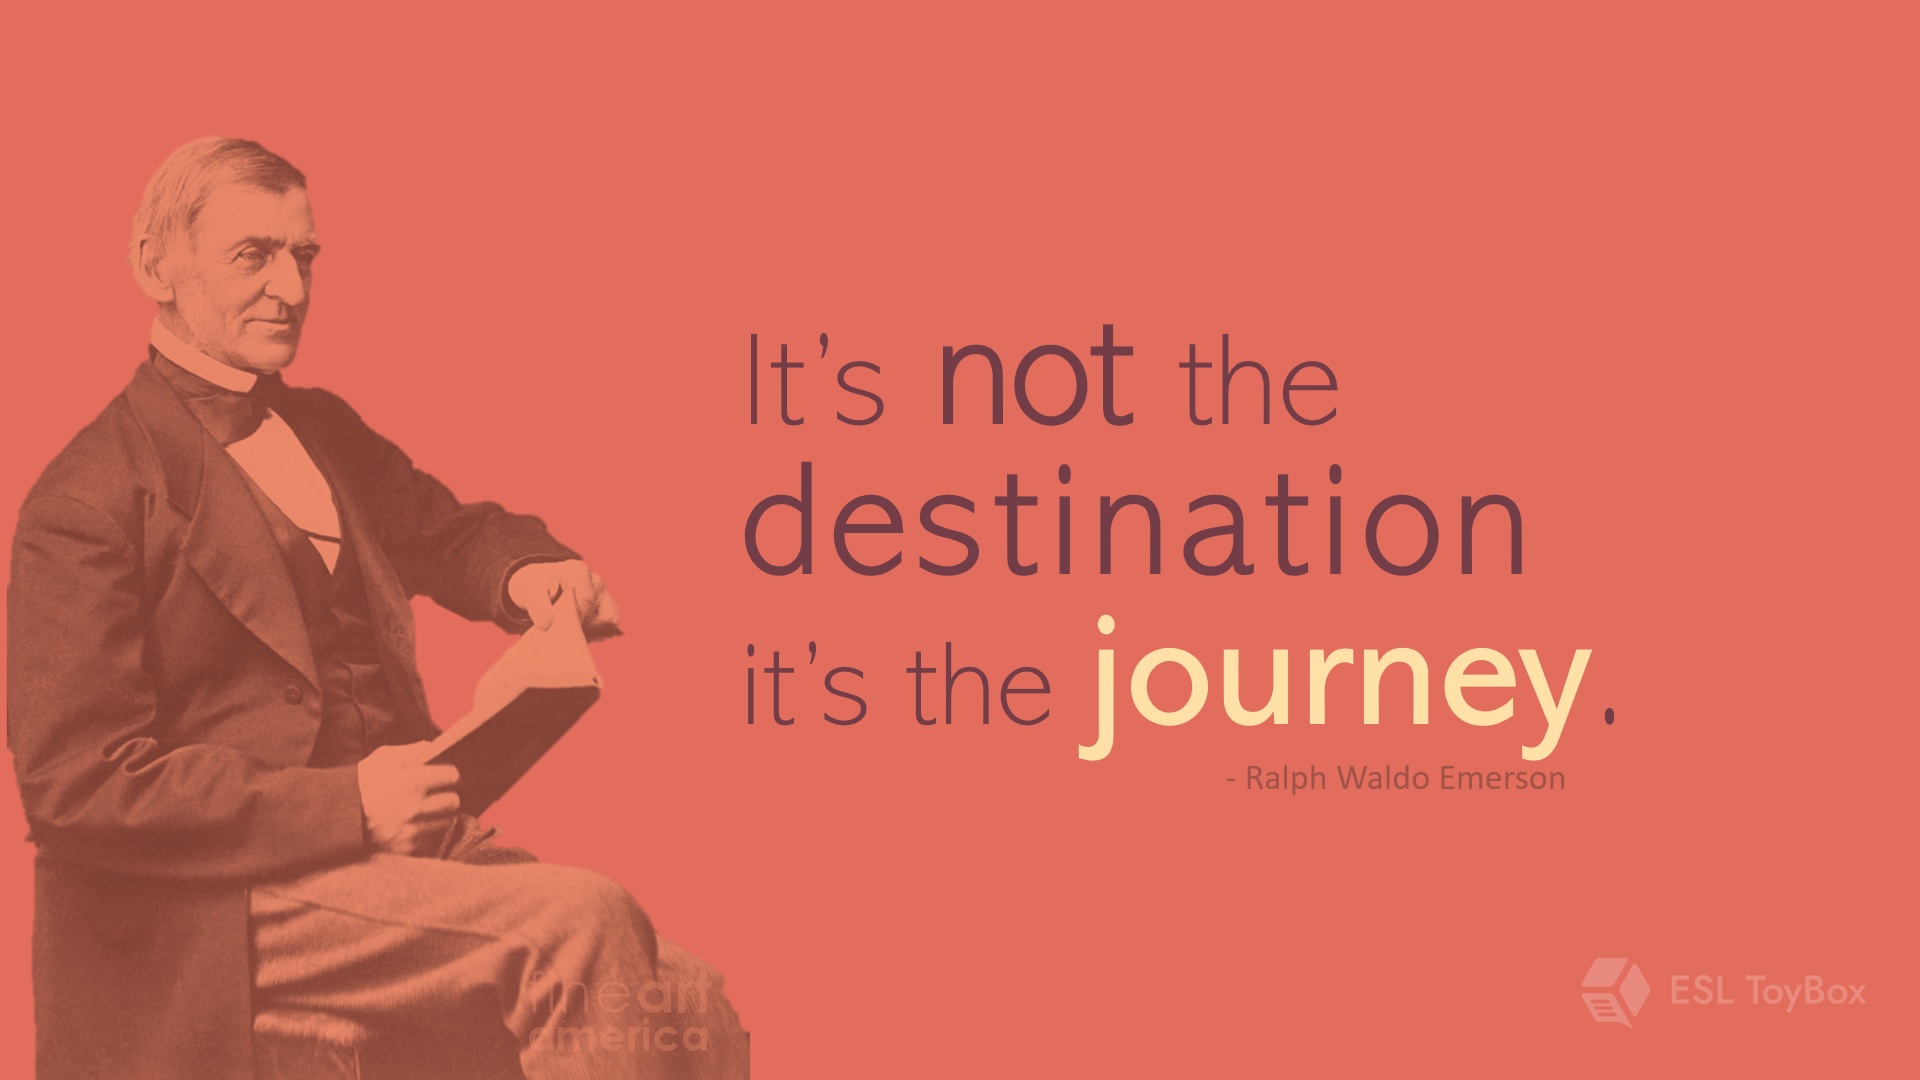 It’s not the destination, it’s the journey.